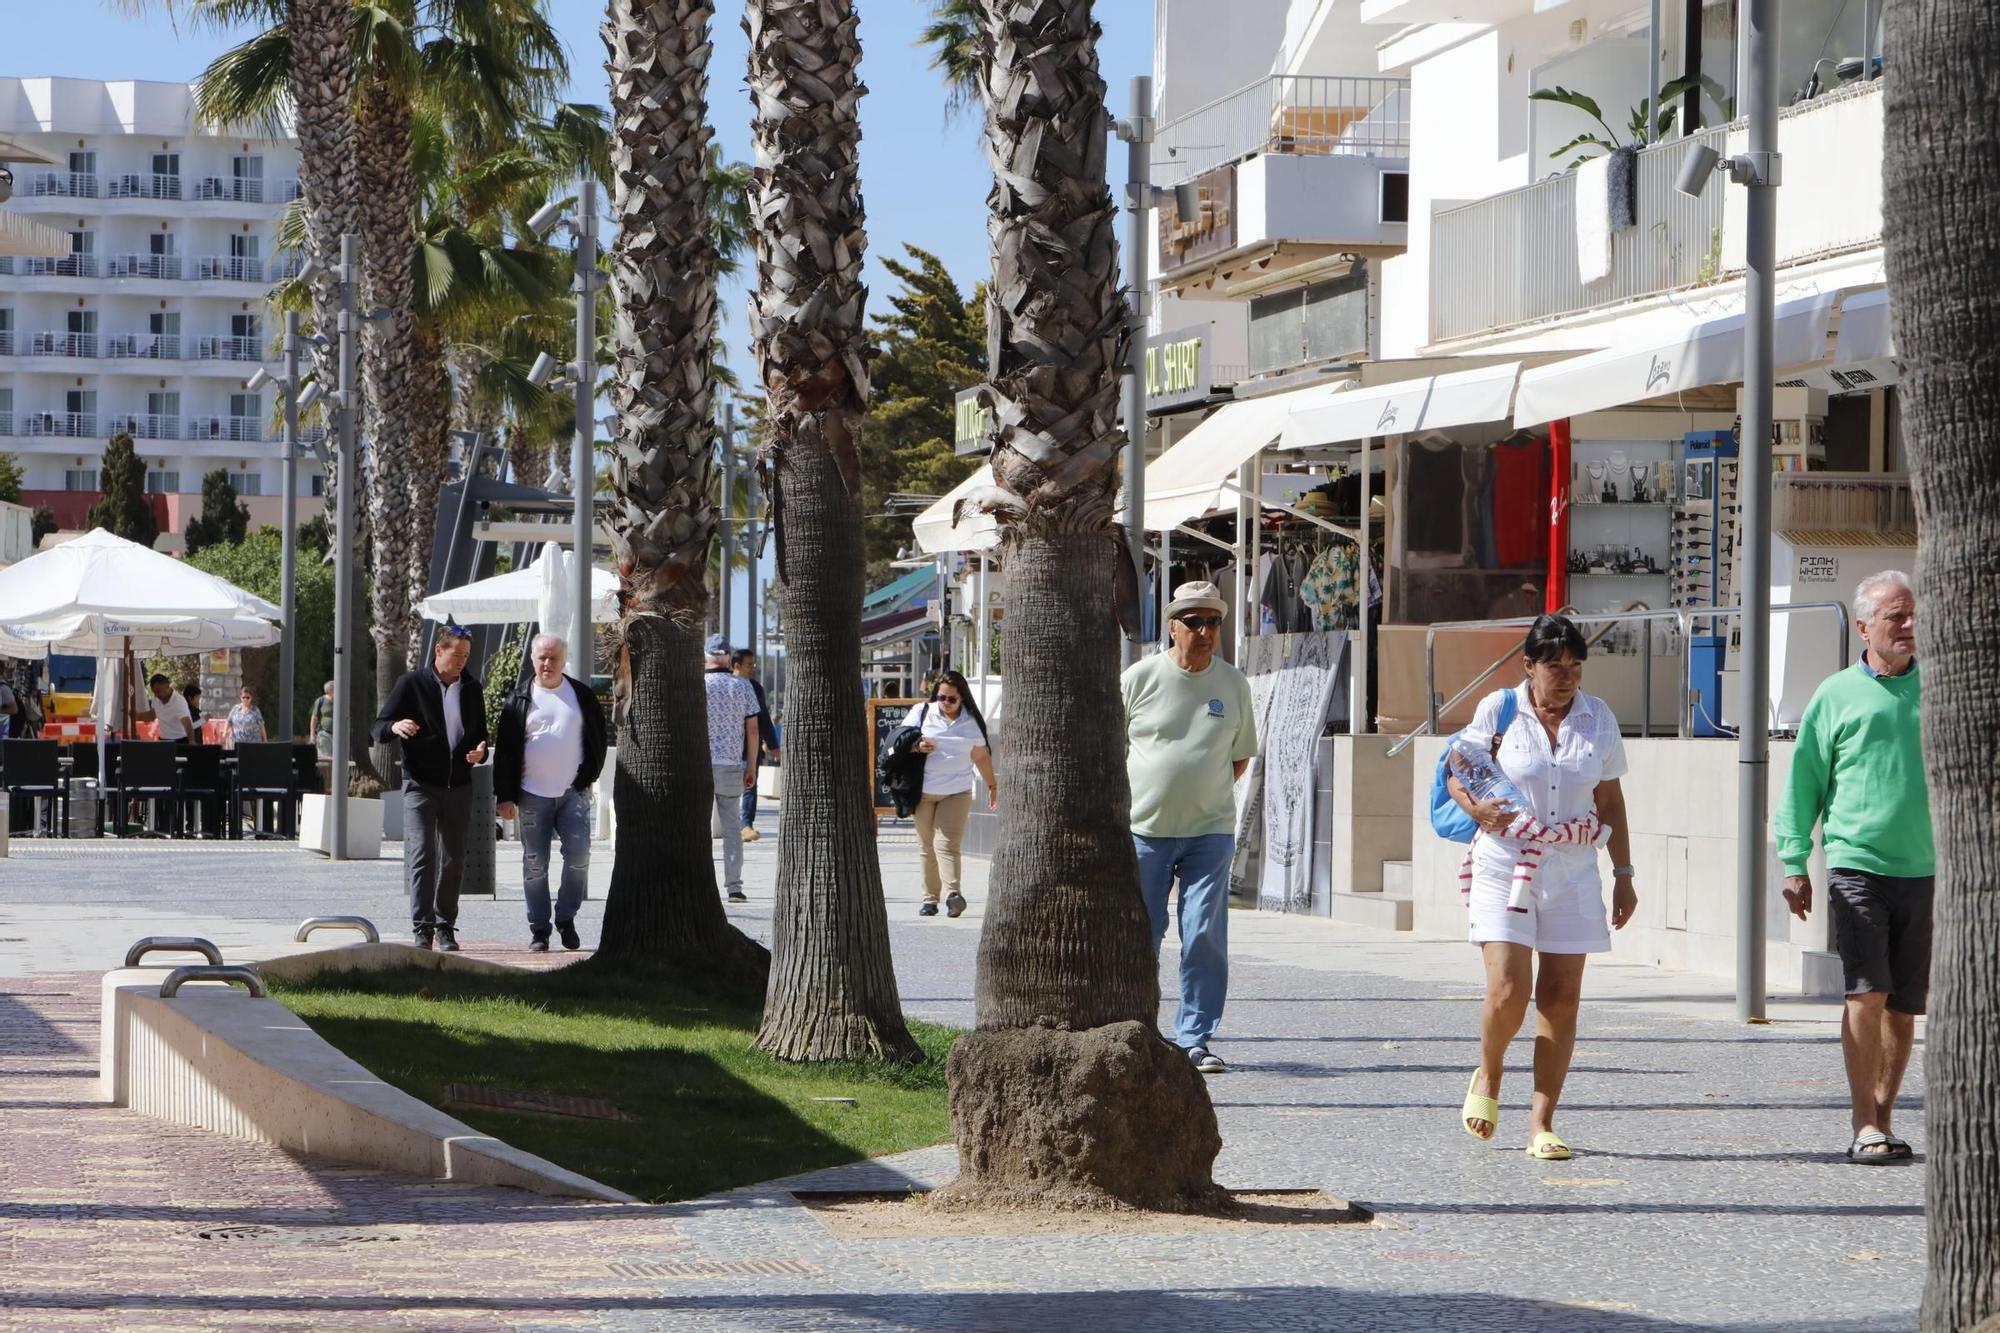 Frühlingsgefühle auf Mallorca – so sieht es gerade in Cala Millor aus